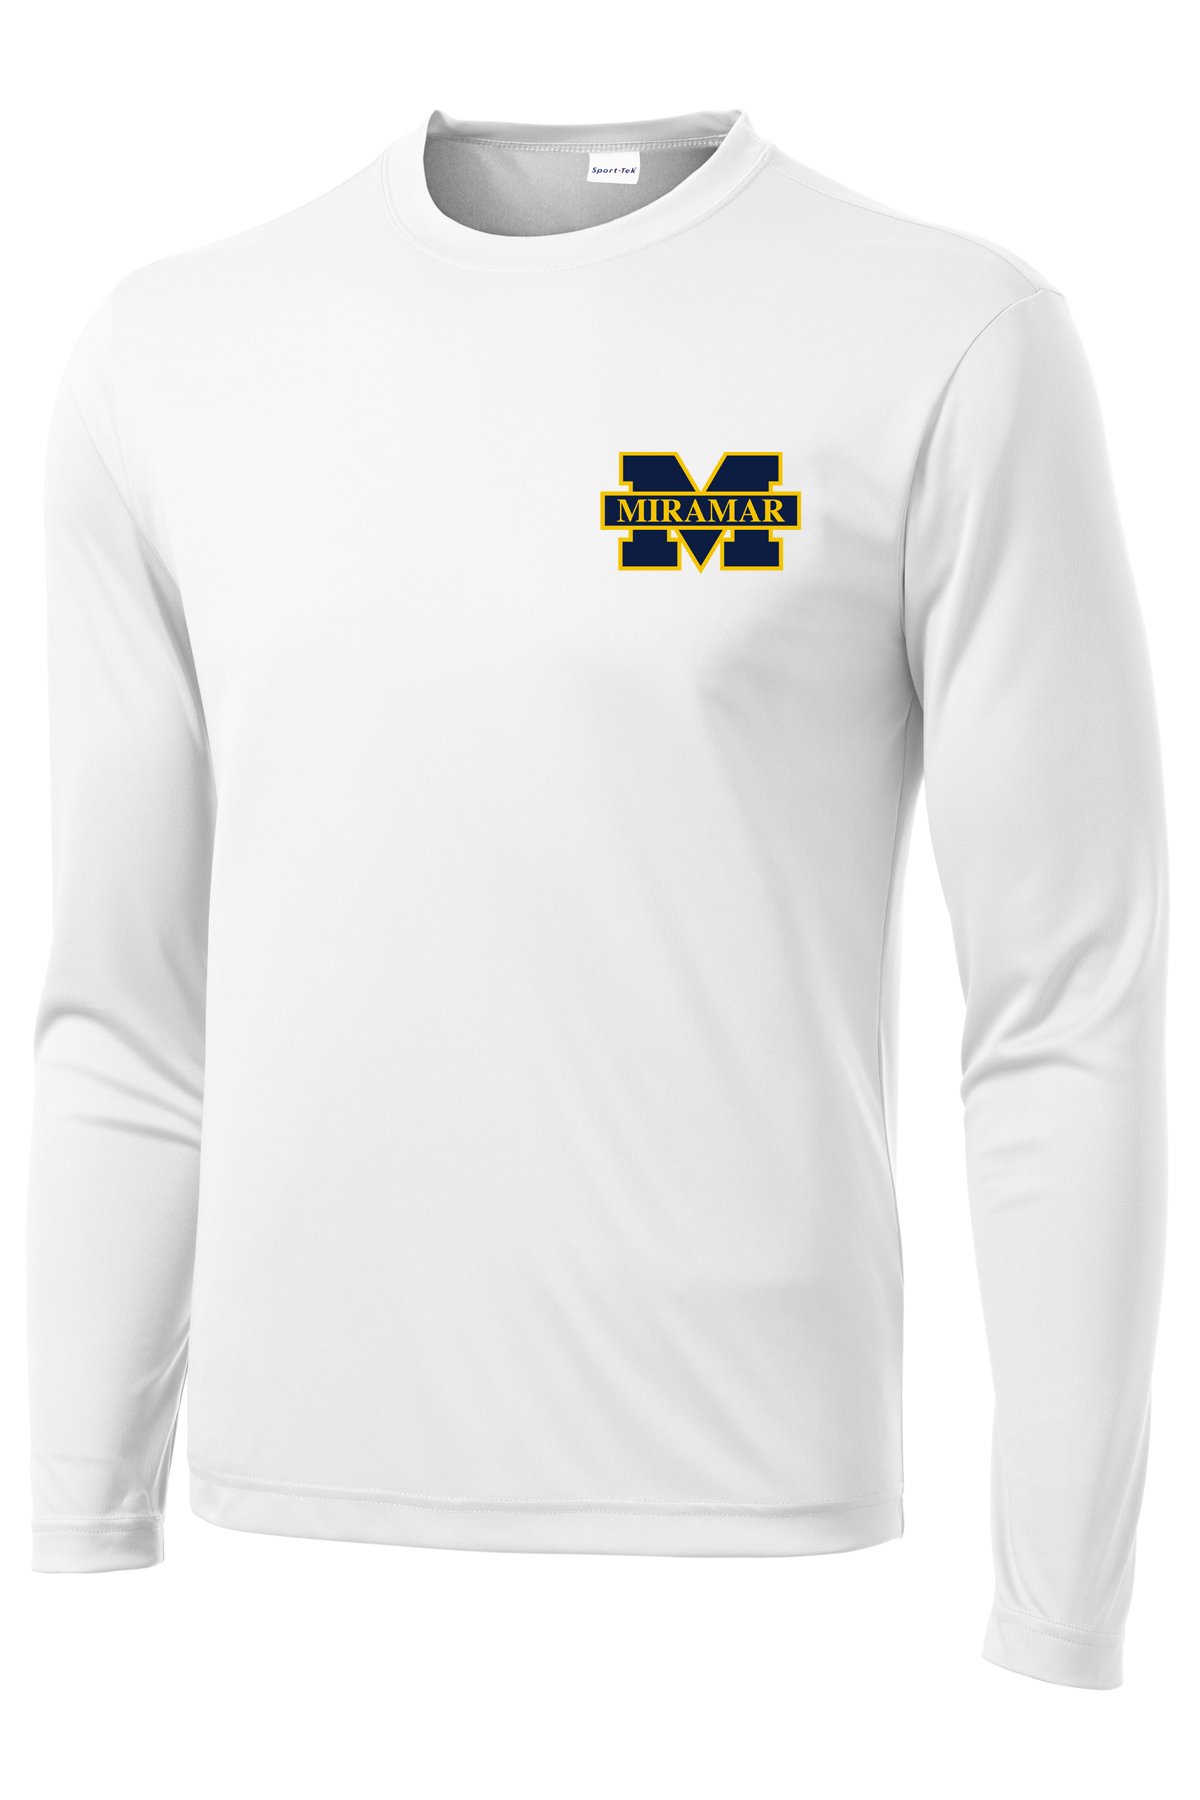 Miramar Wolverines Football Long Sleeve Performance Shirt